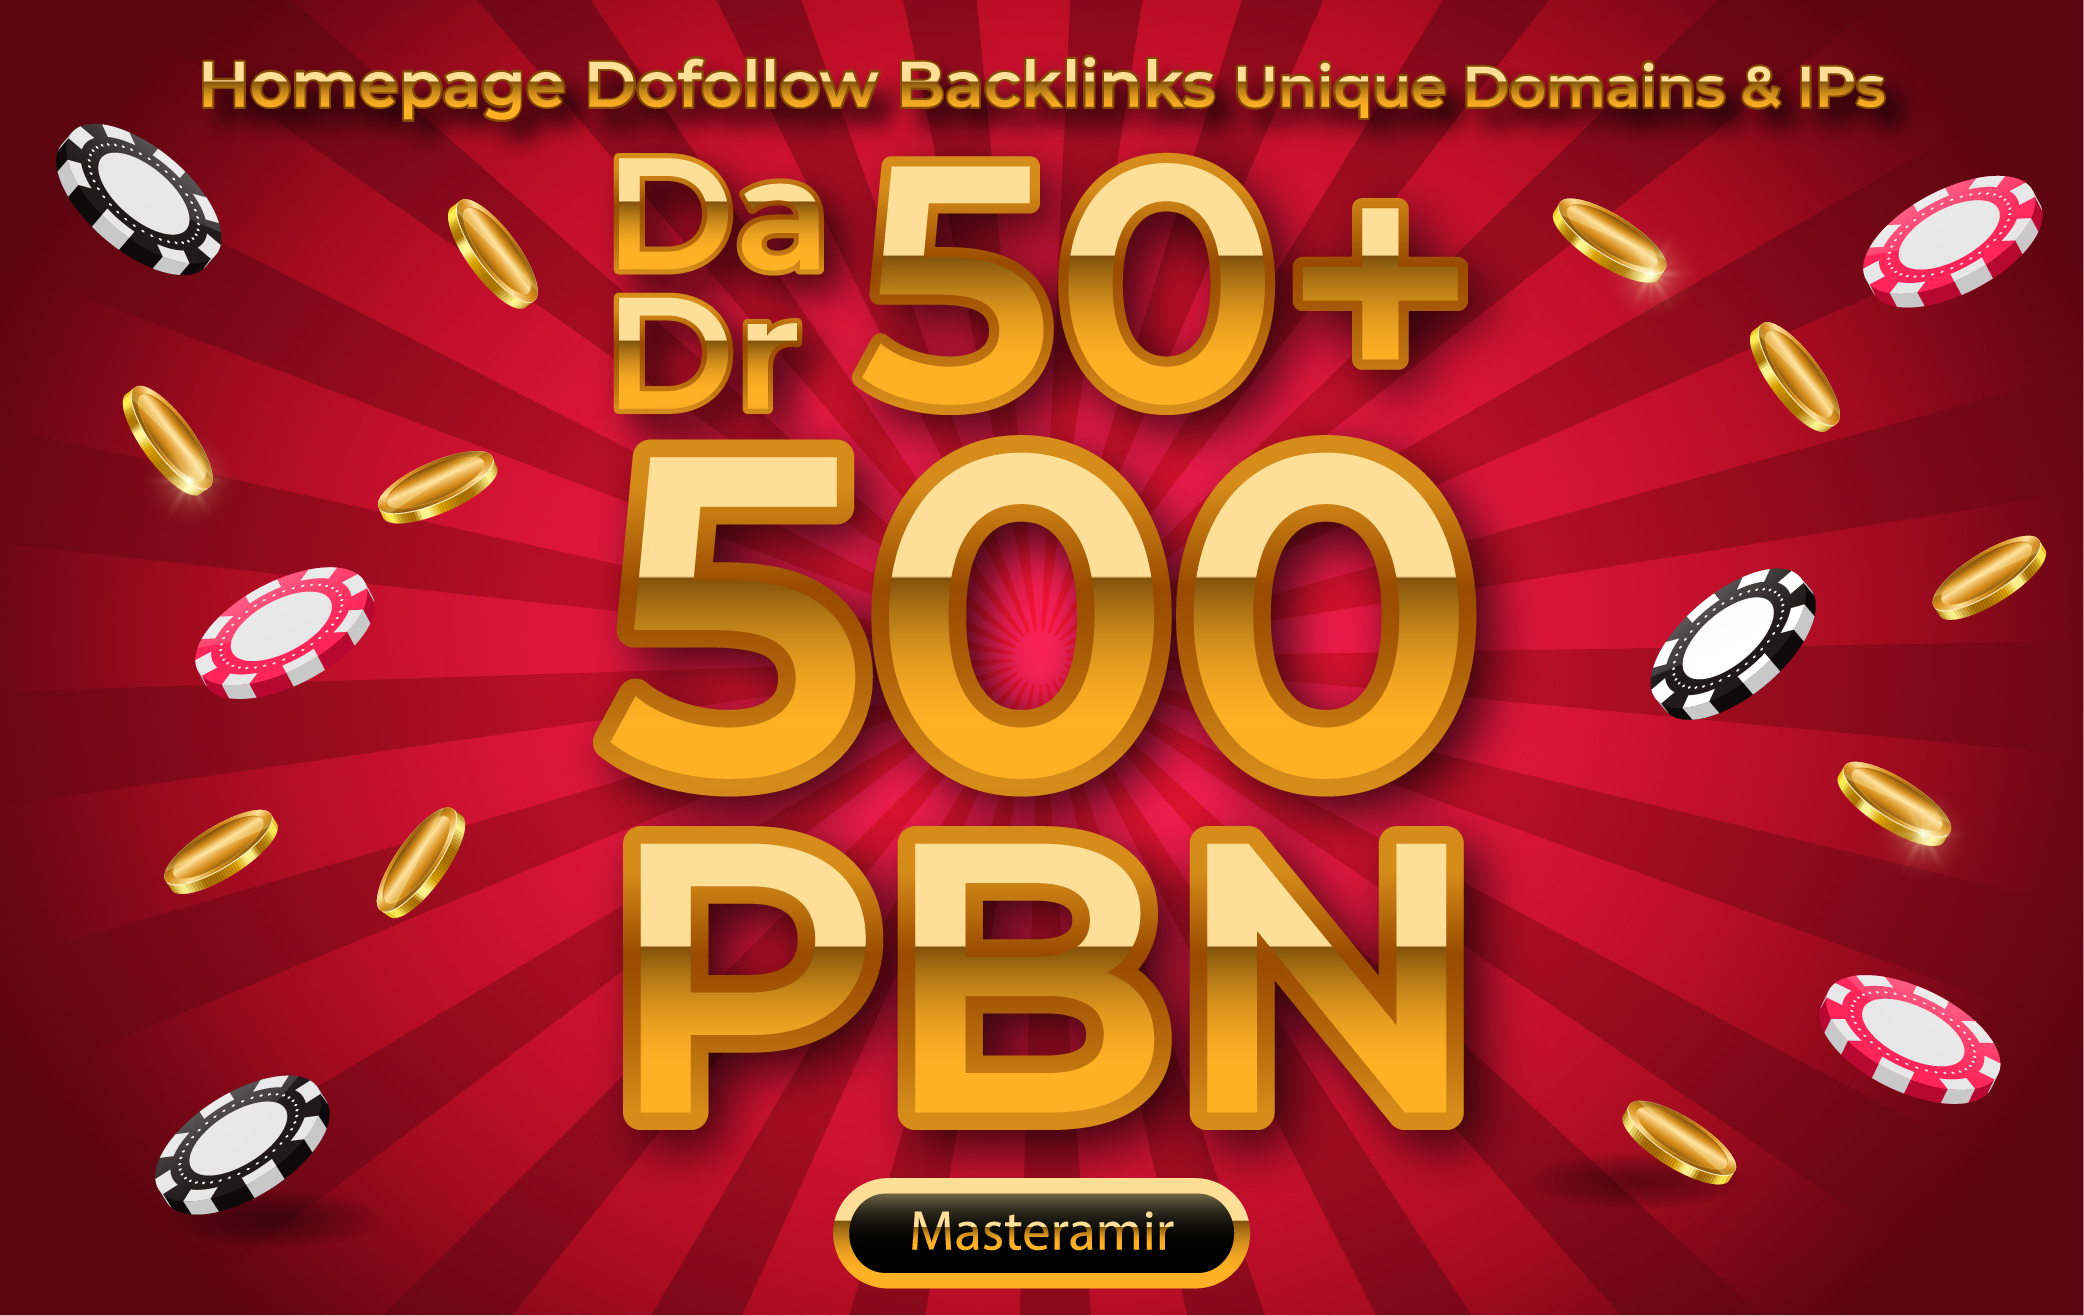 PBN DA & DR 50+ Homepage DoFollow Links for Casino, Poker, Gambling, & Betting